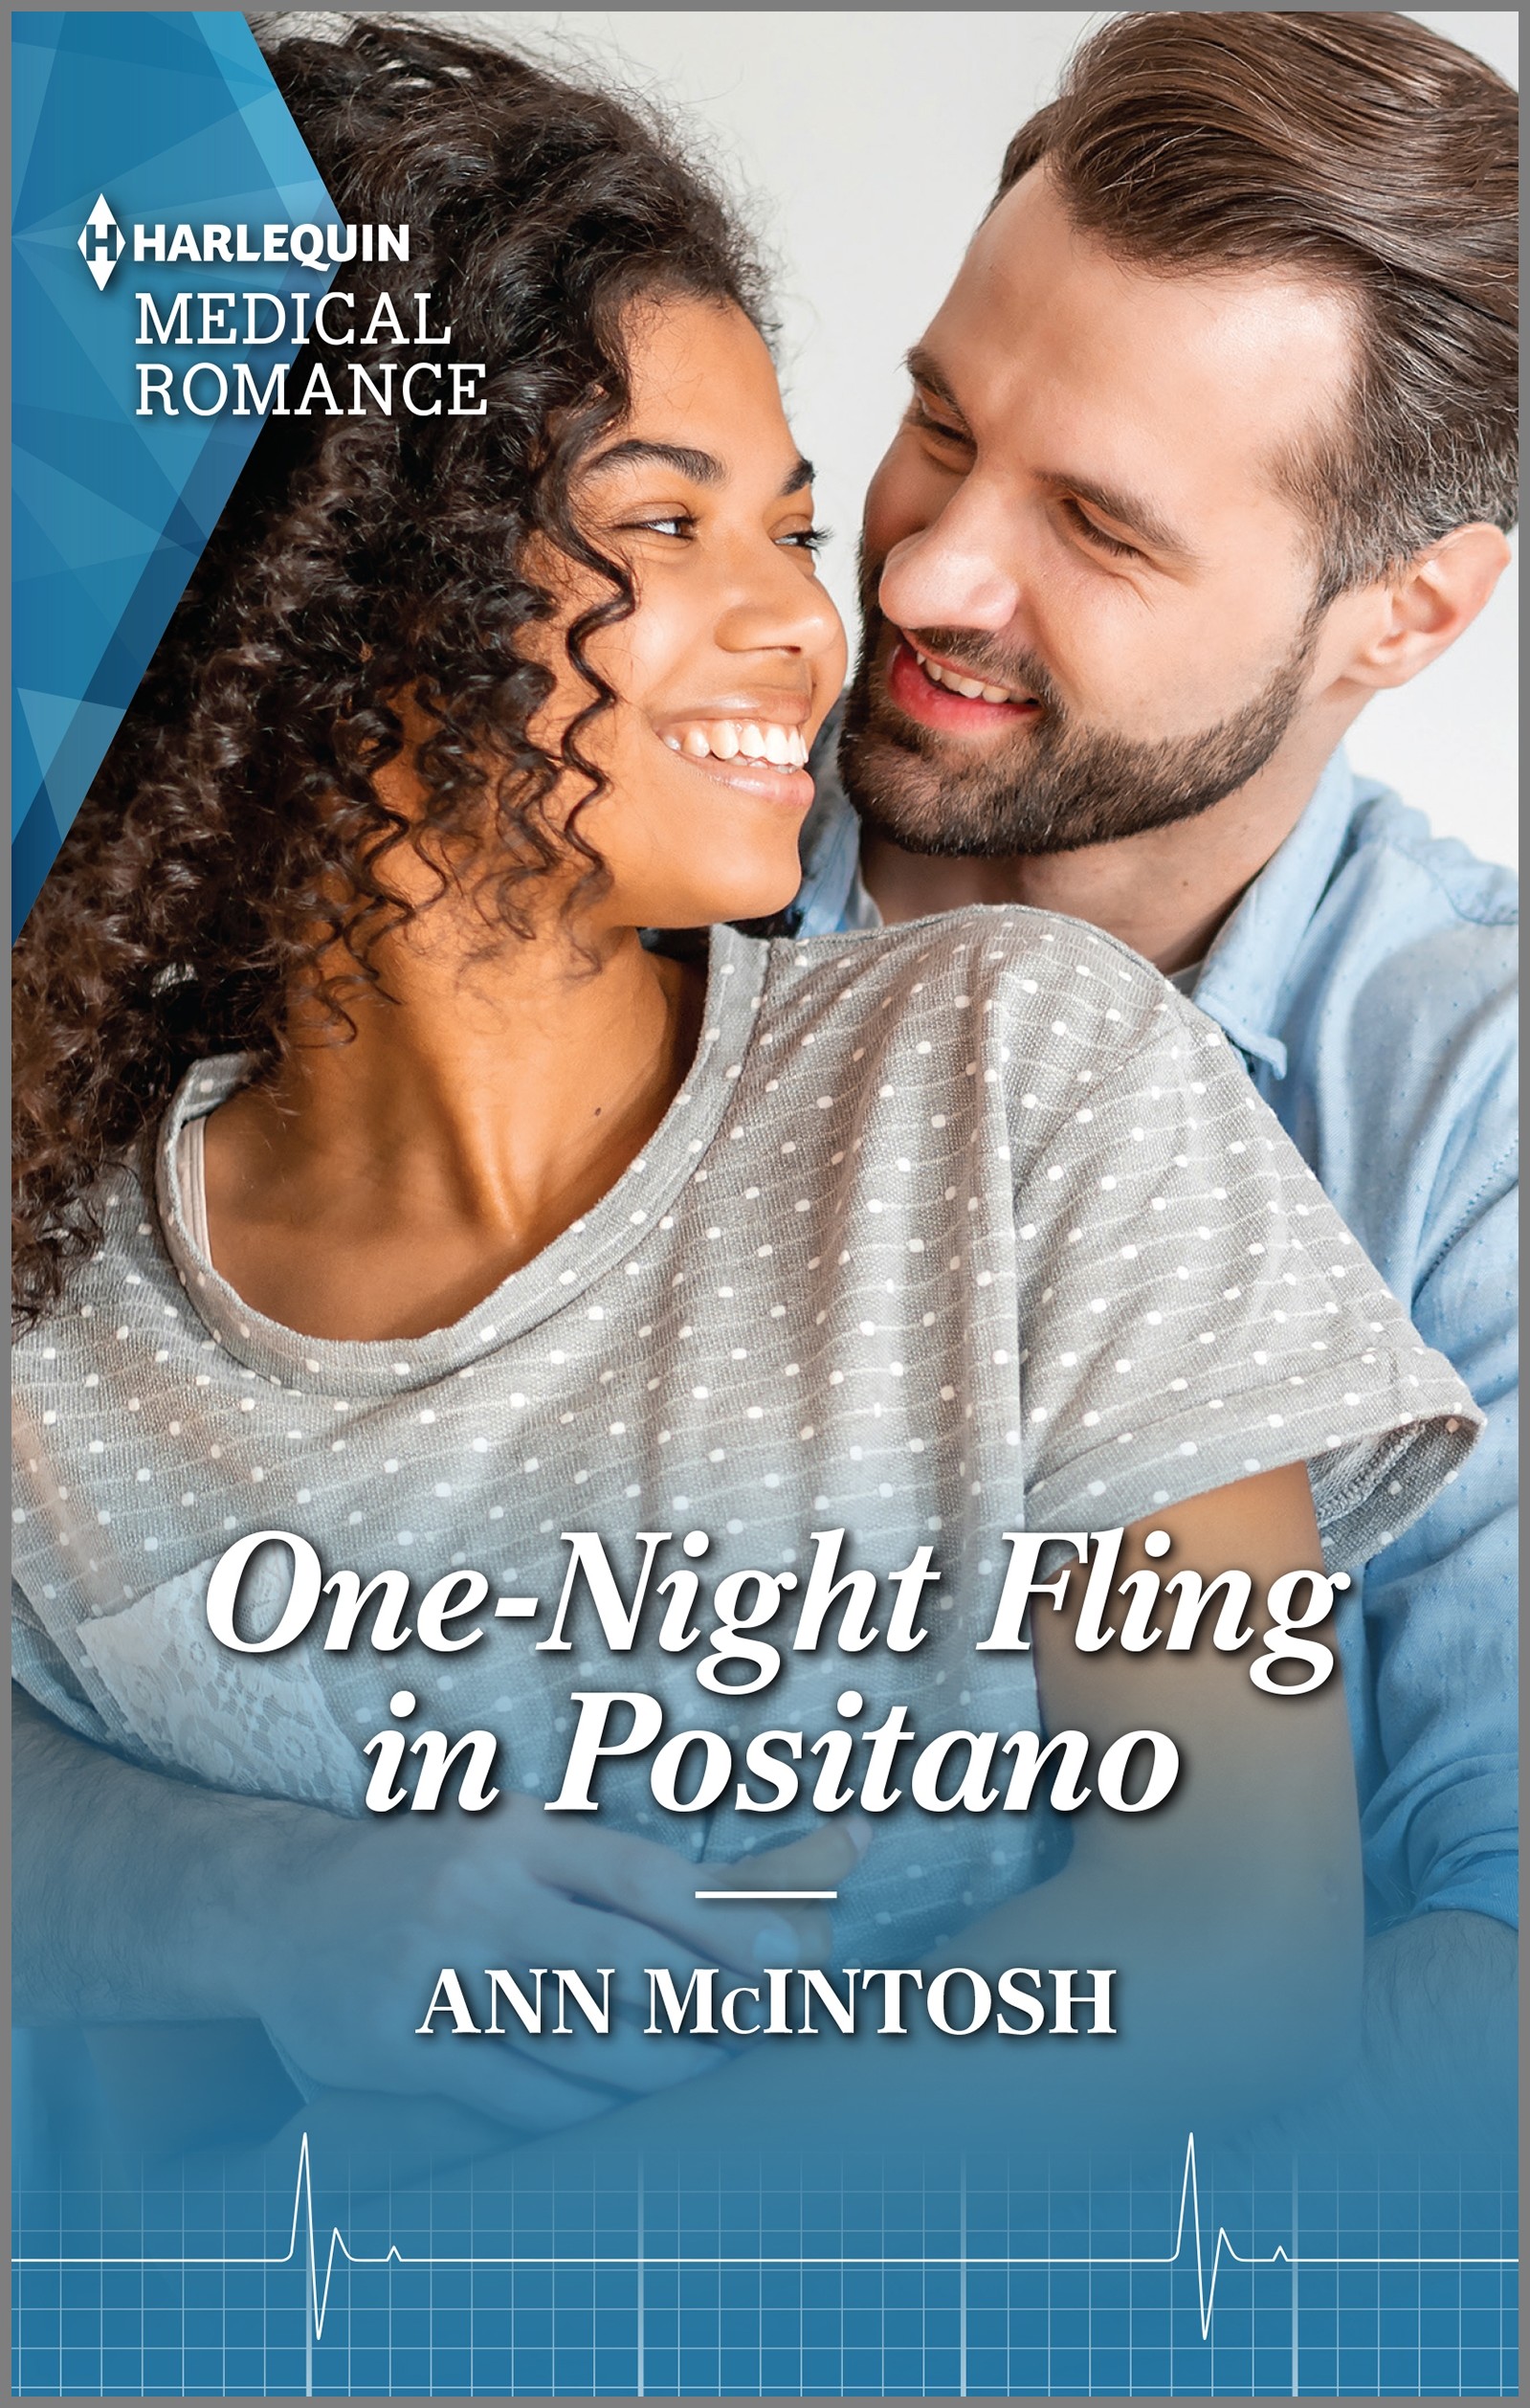 One-Night Fling in Positano by Ann Mcintosh